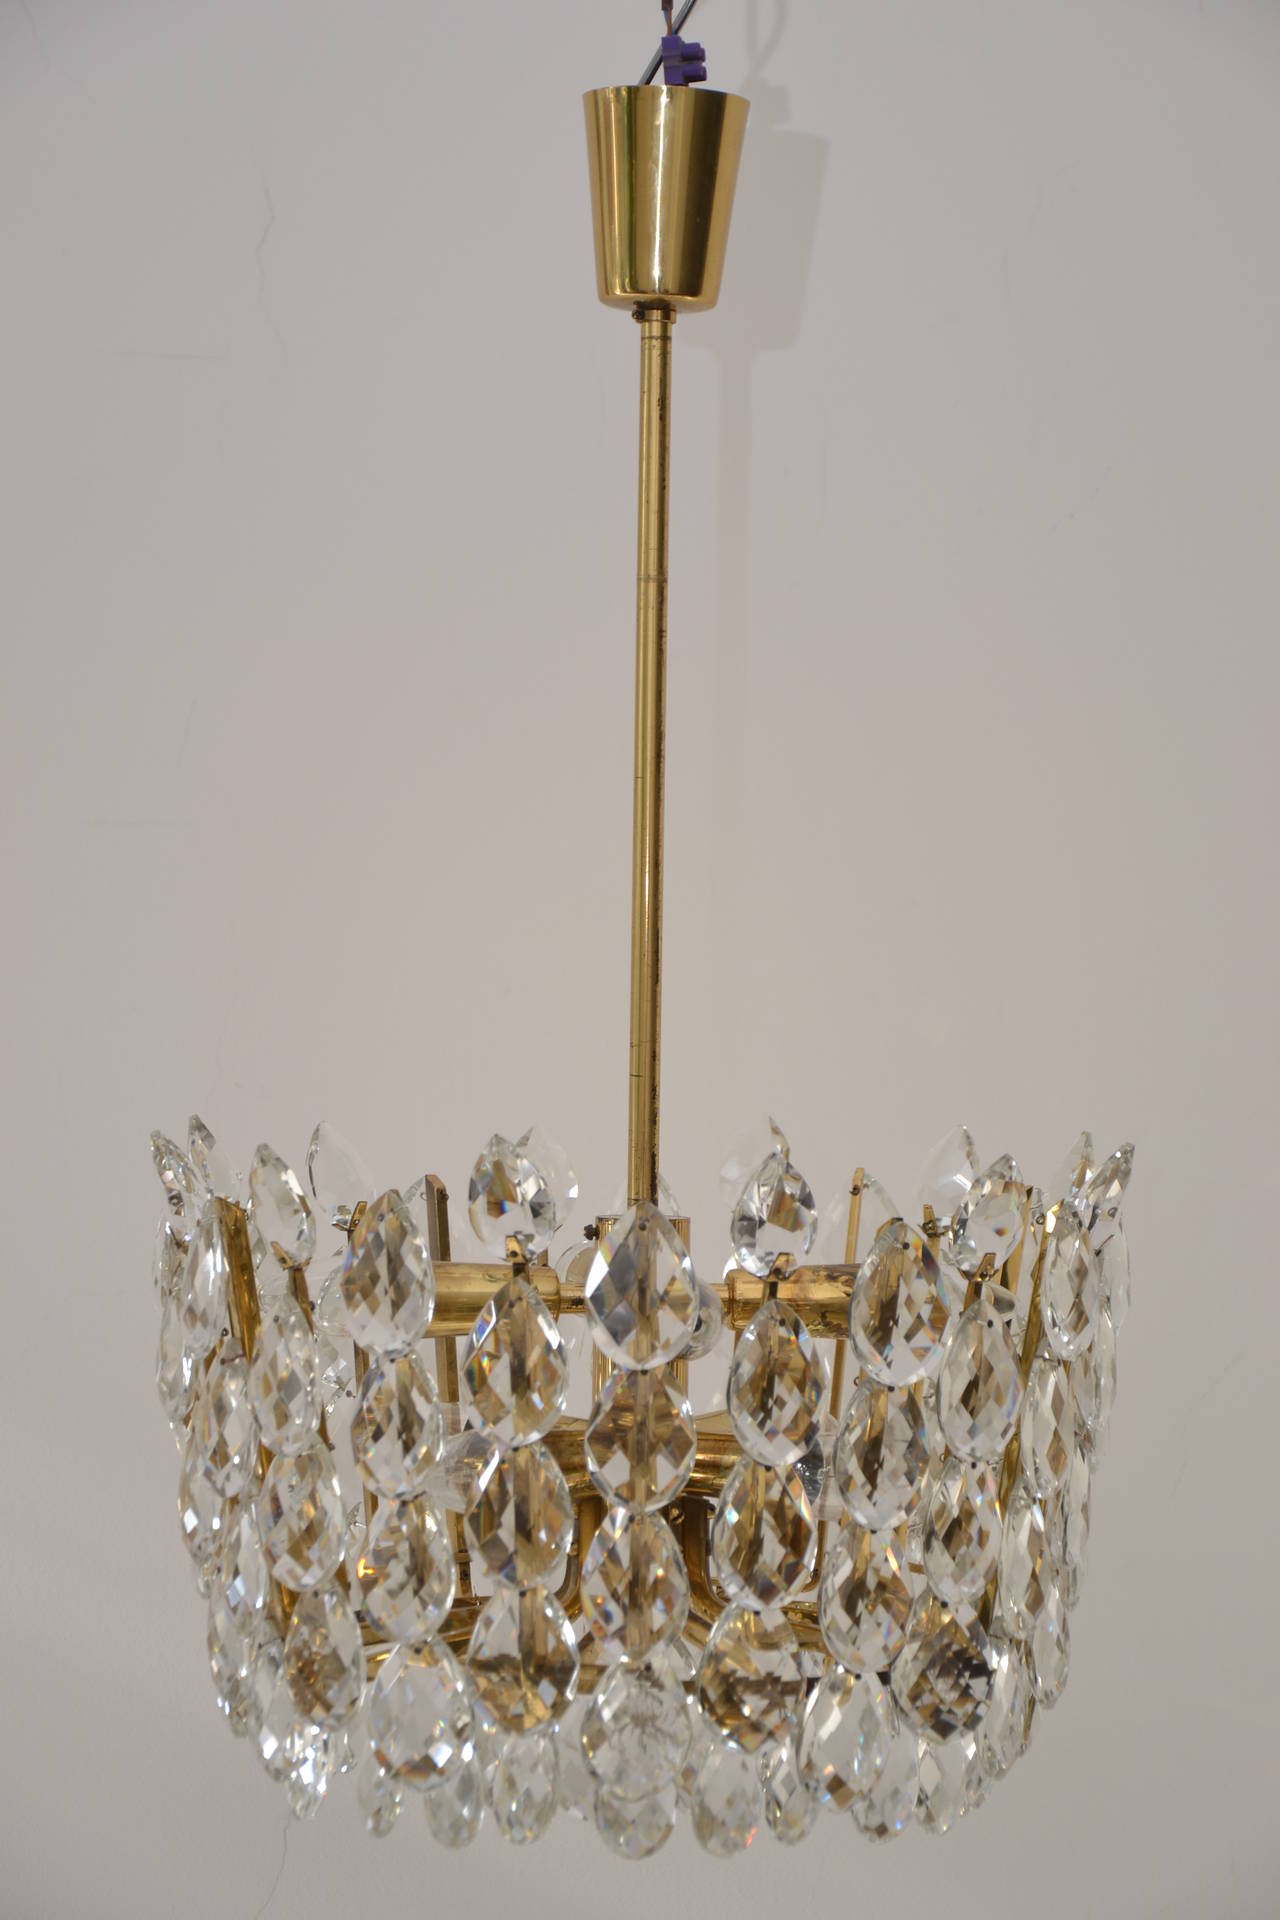 Impressive Bakalowits & Sohne Vienna crystal candelier
Original condition